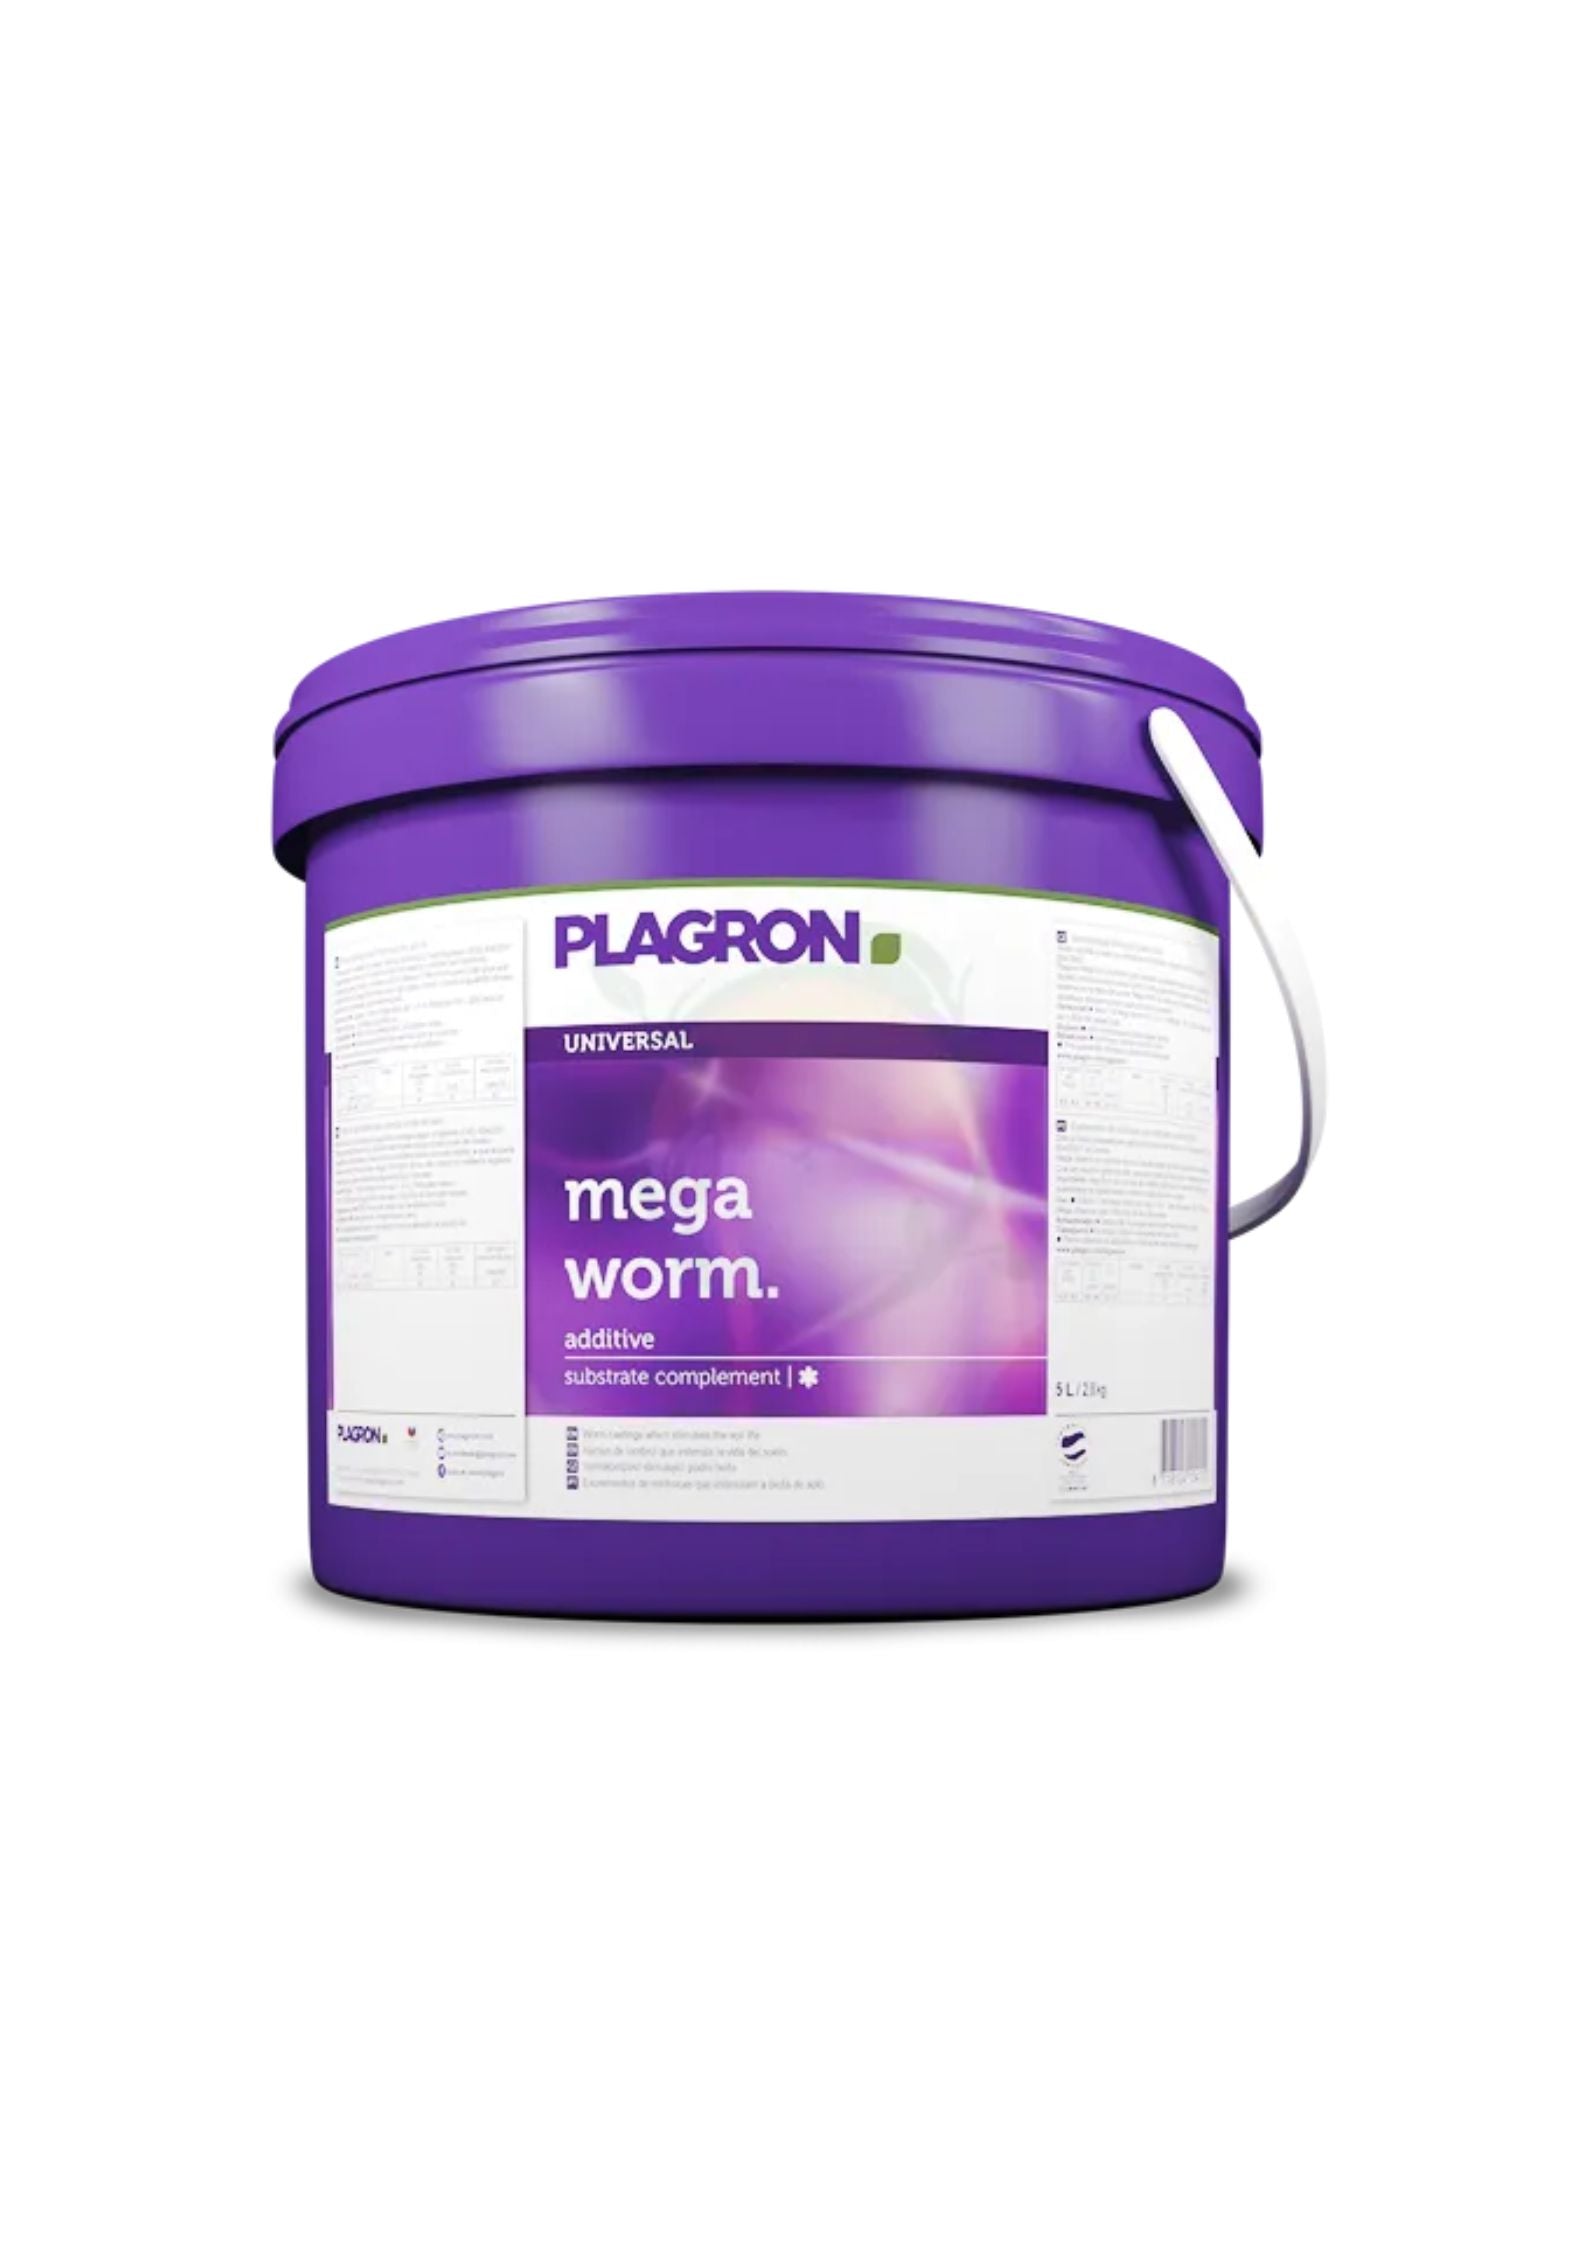 Plagron Mega Worm Castings